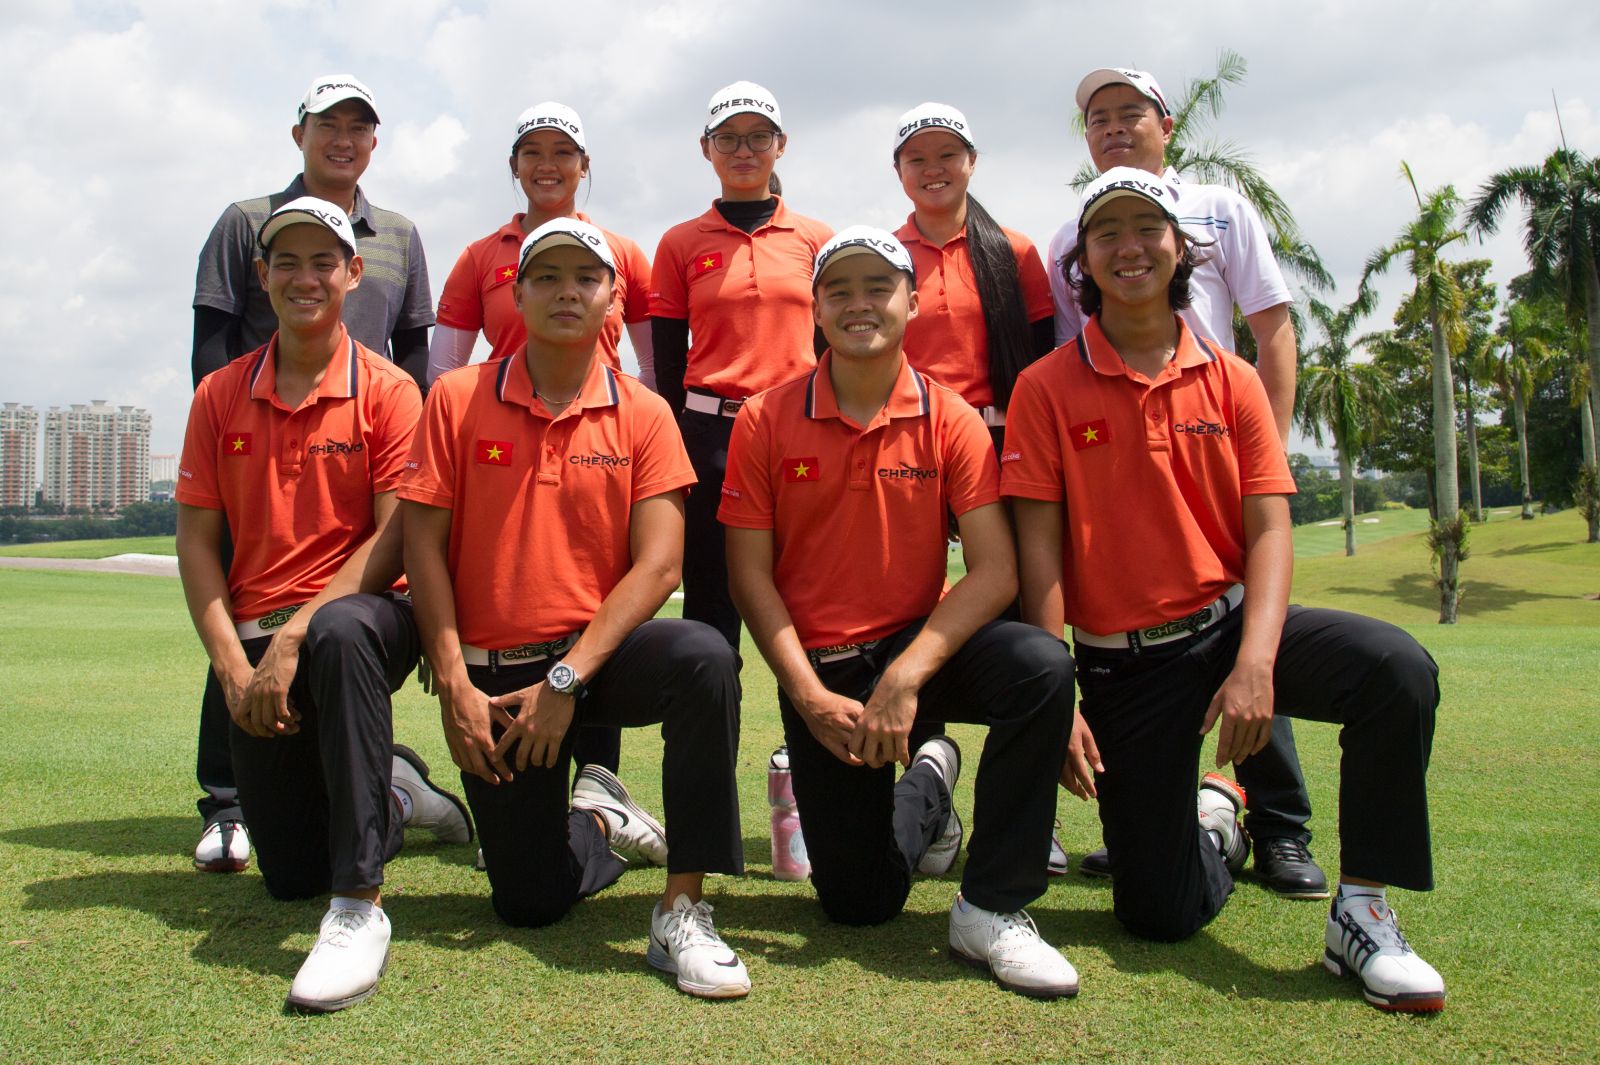 HS Golf and Chervo sponsor Vietnam Golf team in uniform at SEA Games 29